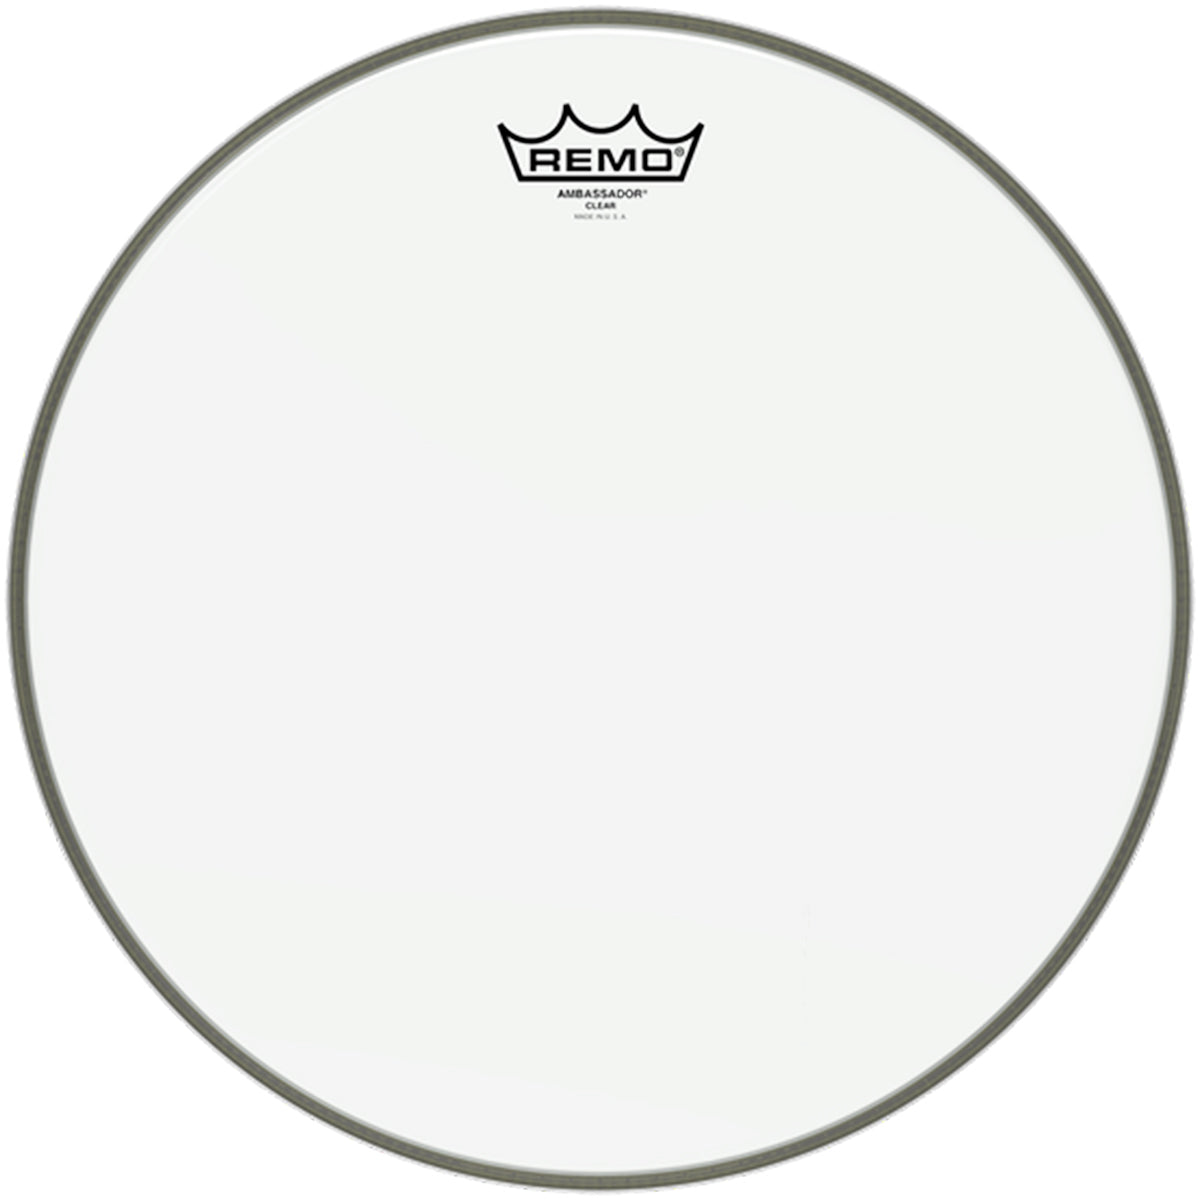 Remo BA-0313-00 Ambassador Drum Head Skin 13 Inch Clear